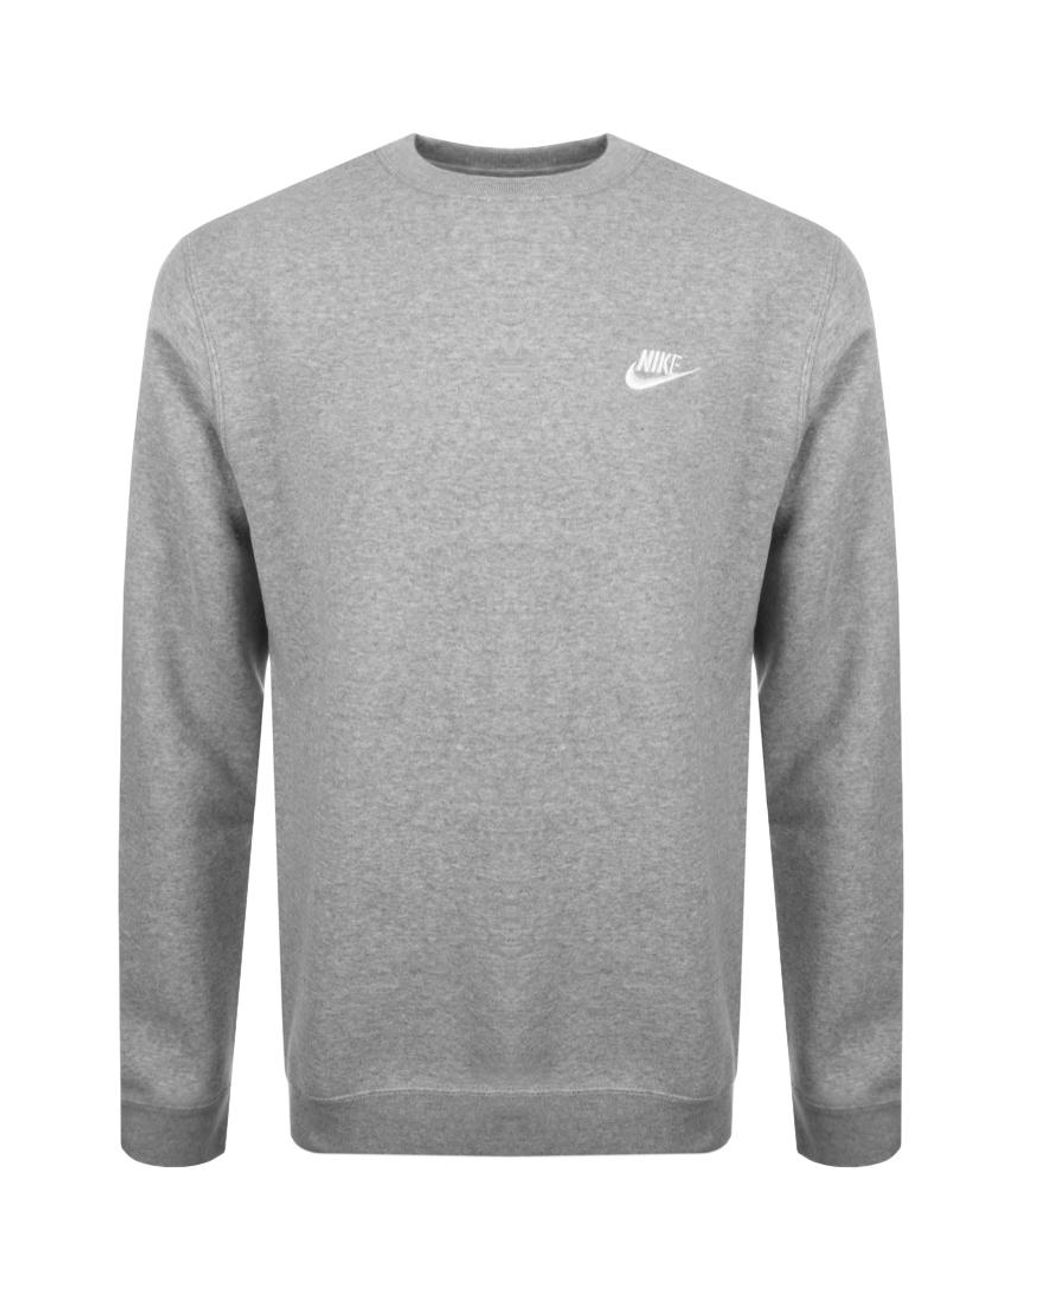 Nike Cotton Crew Neck Club Sweatshirt in Grey (Gray) for Men - Save 51% ...